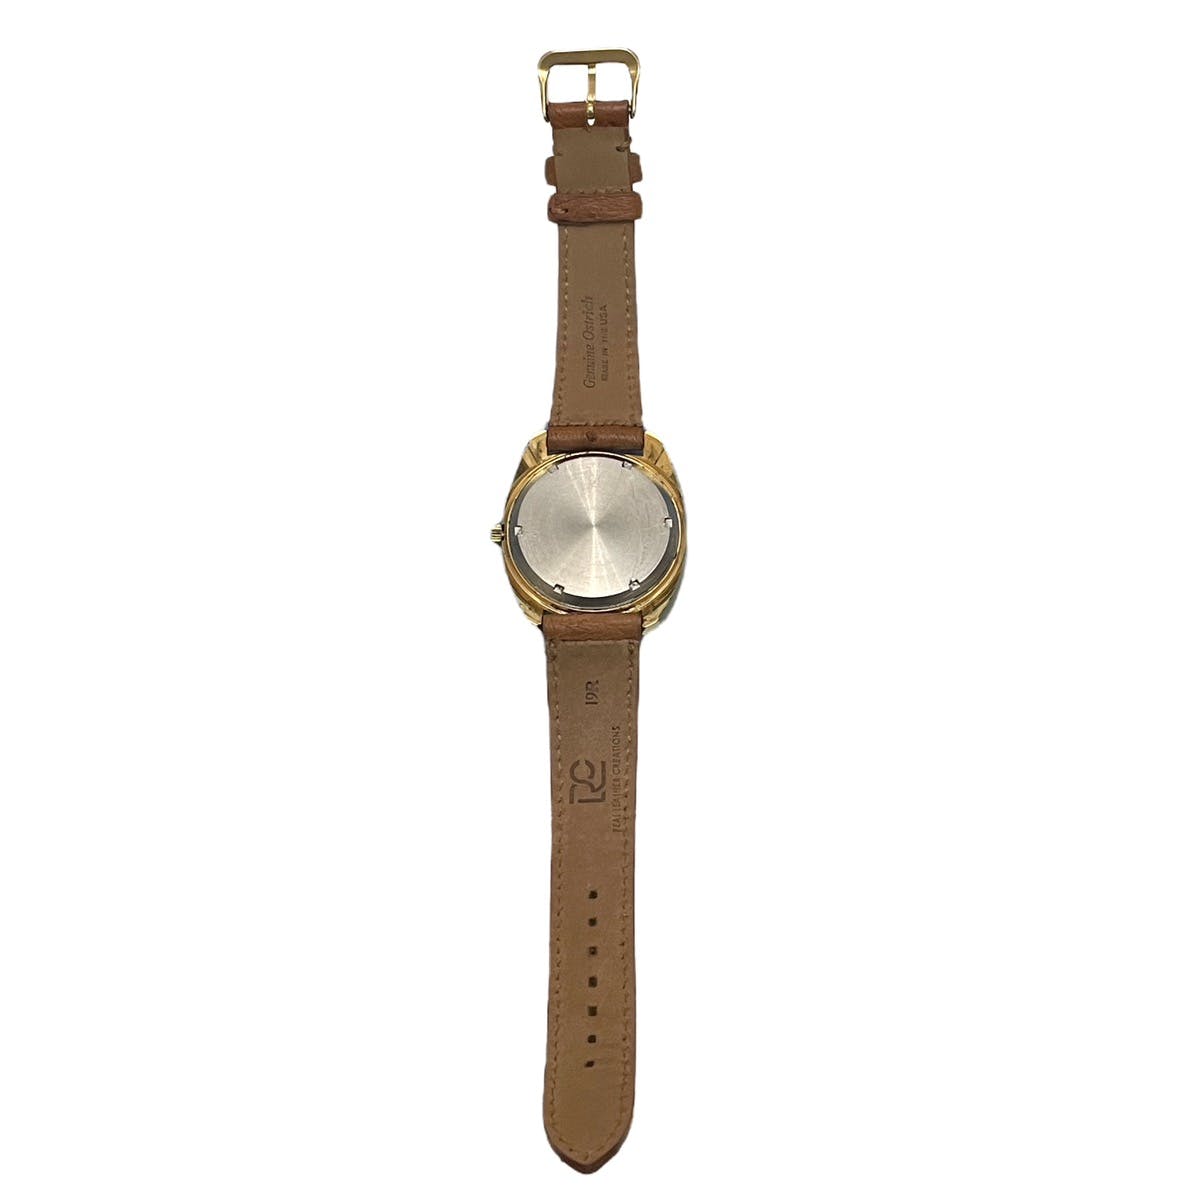 Omega - Vintage 1972 Gold Geneve Electronic Chronometer Watch - 12